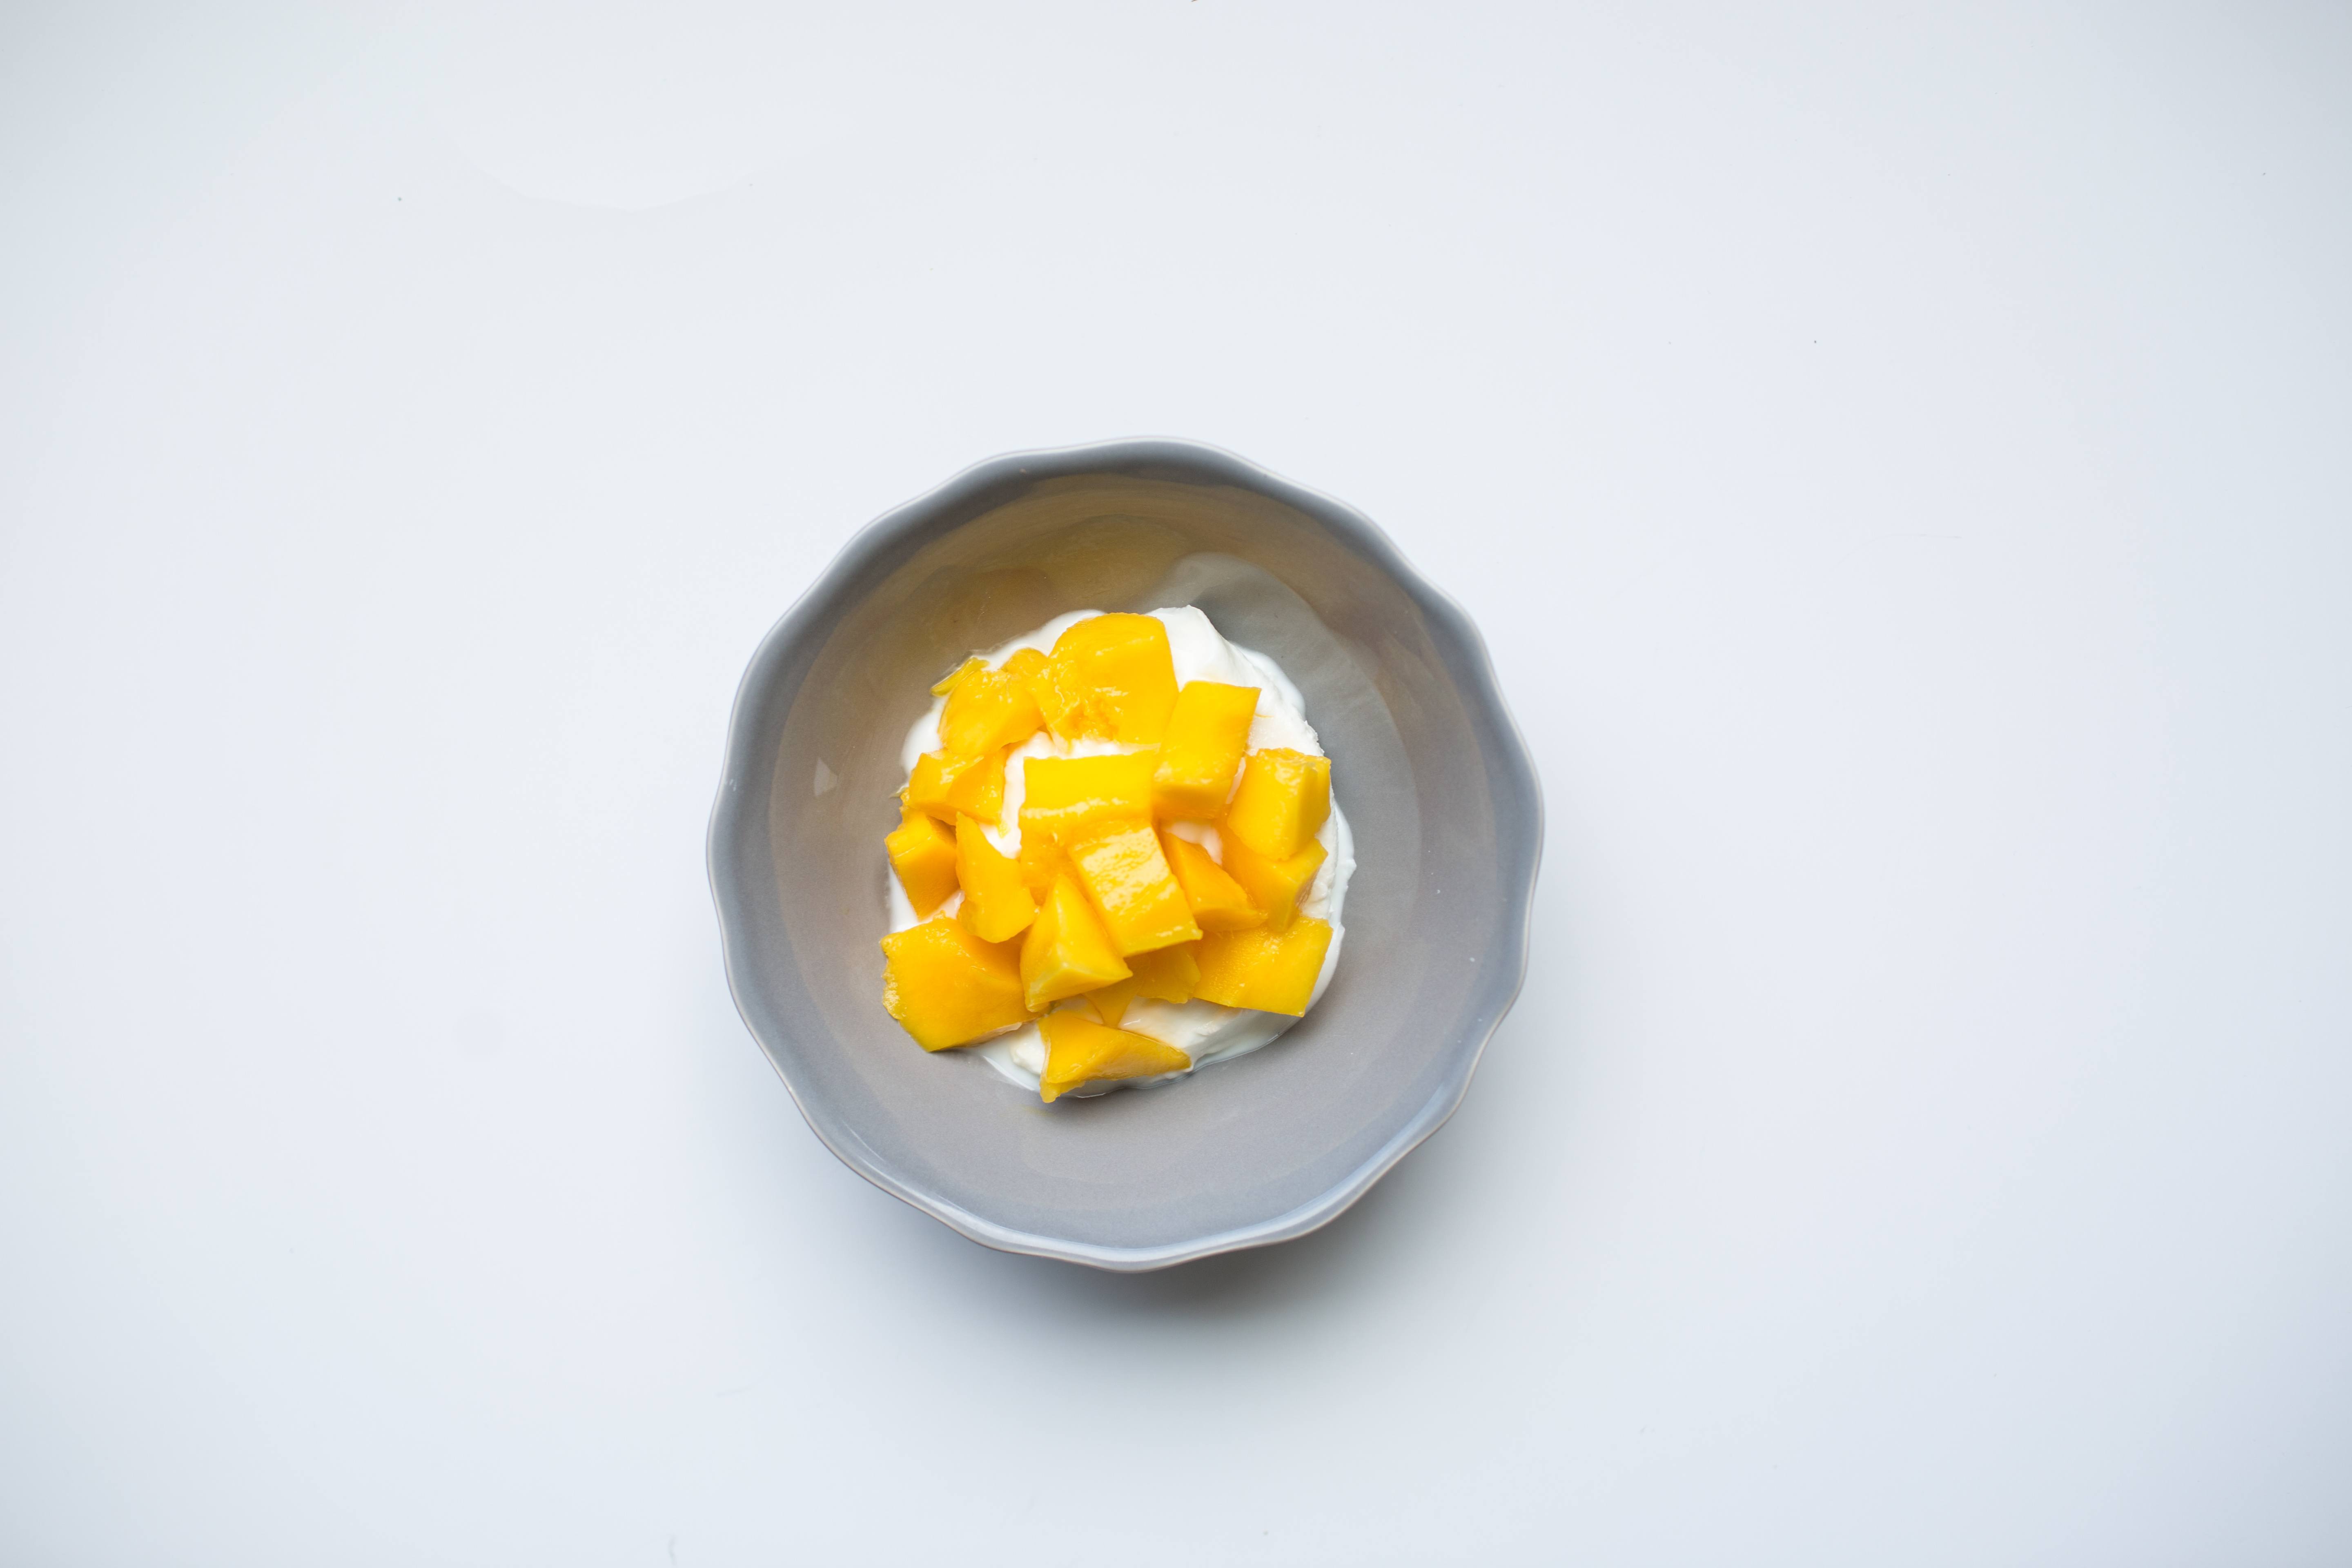 100 calorie snack fat free yogurt and mango